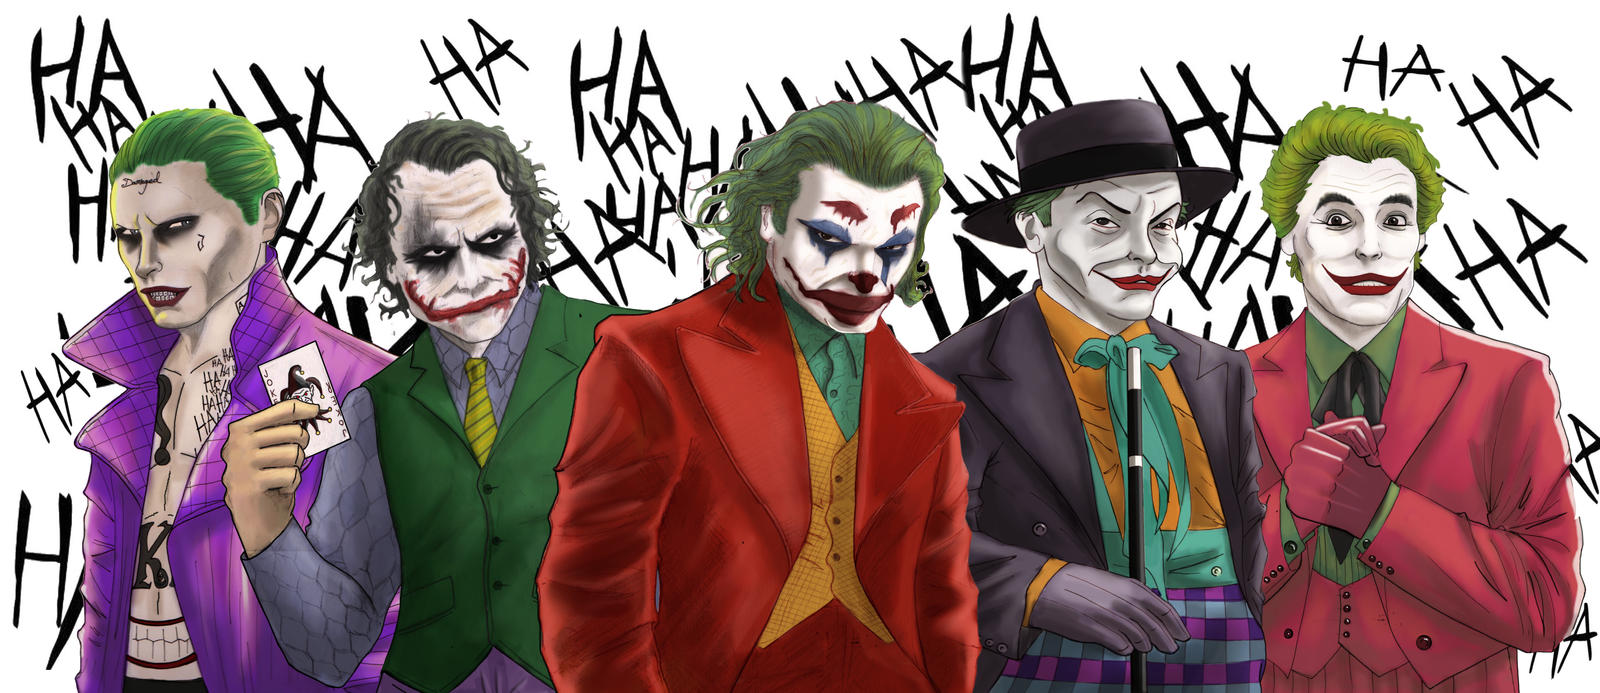 Jokers by Gilliland35 on DeviantArt